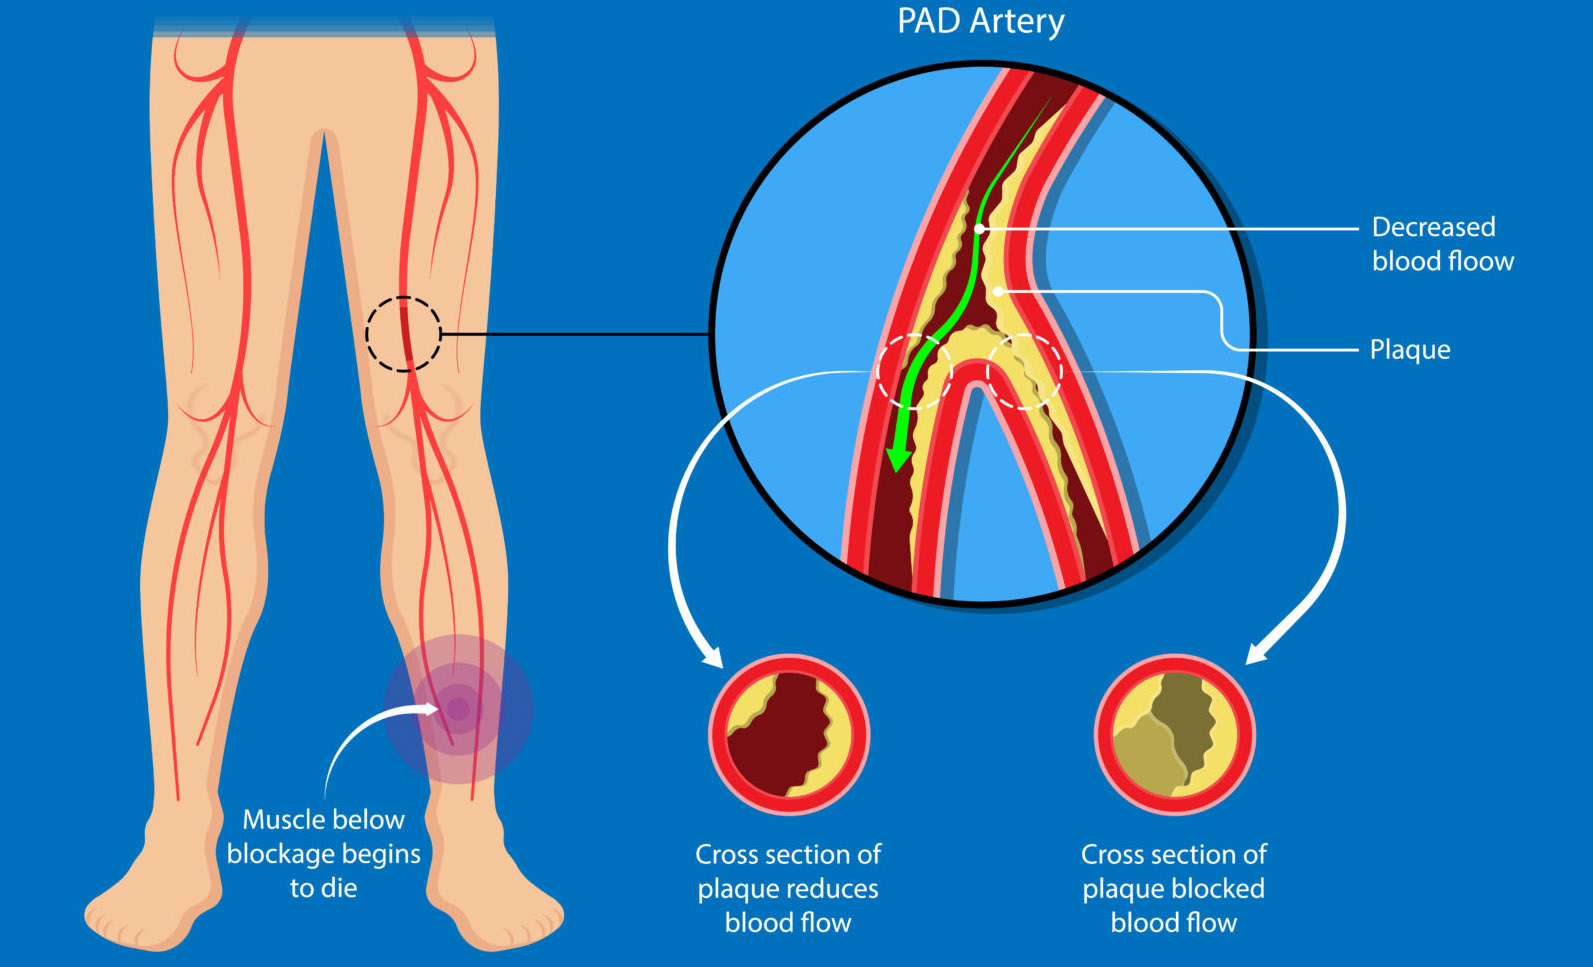 PAD Artery Disease